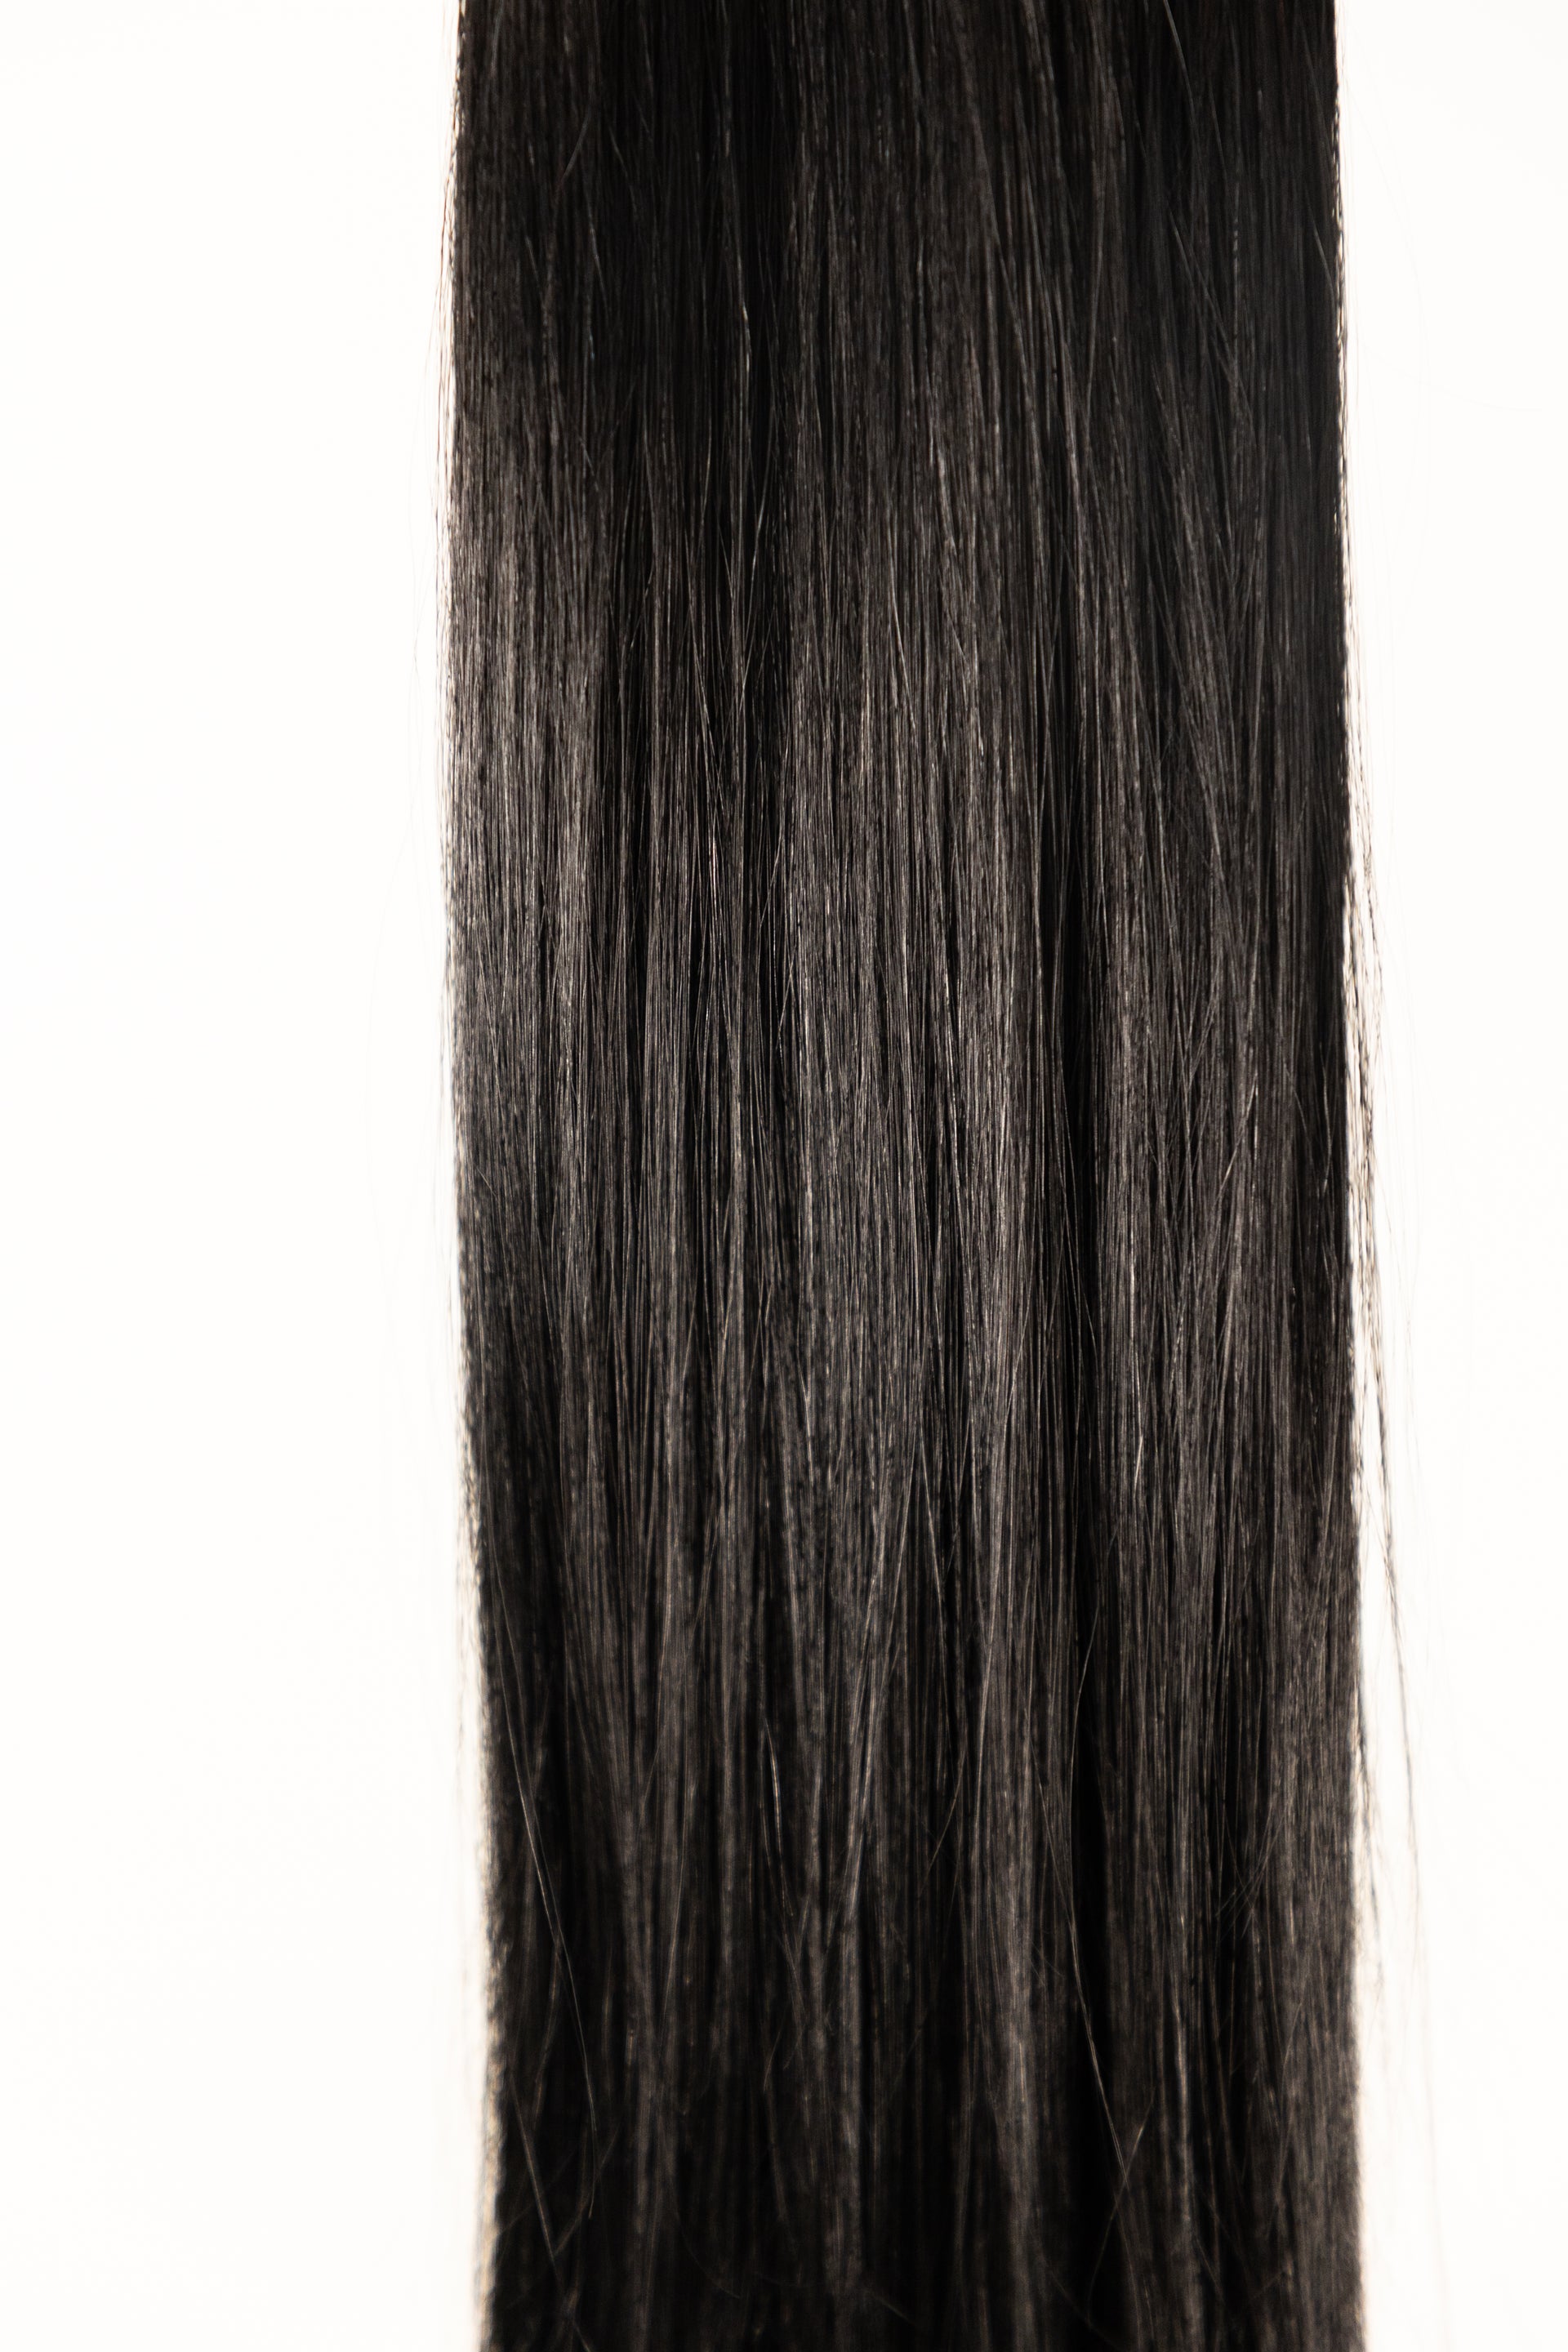 #2 (Darkest Brown) European Virgin Remy Human Hair, Bulk